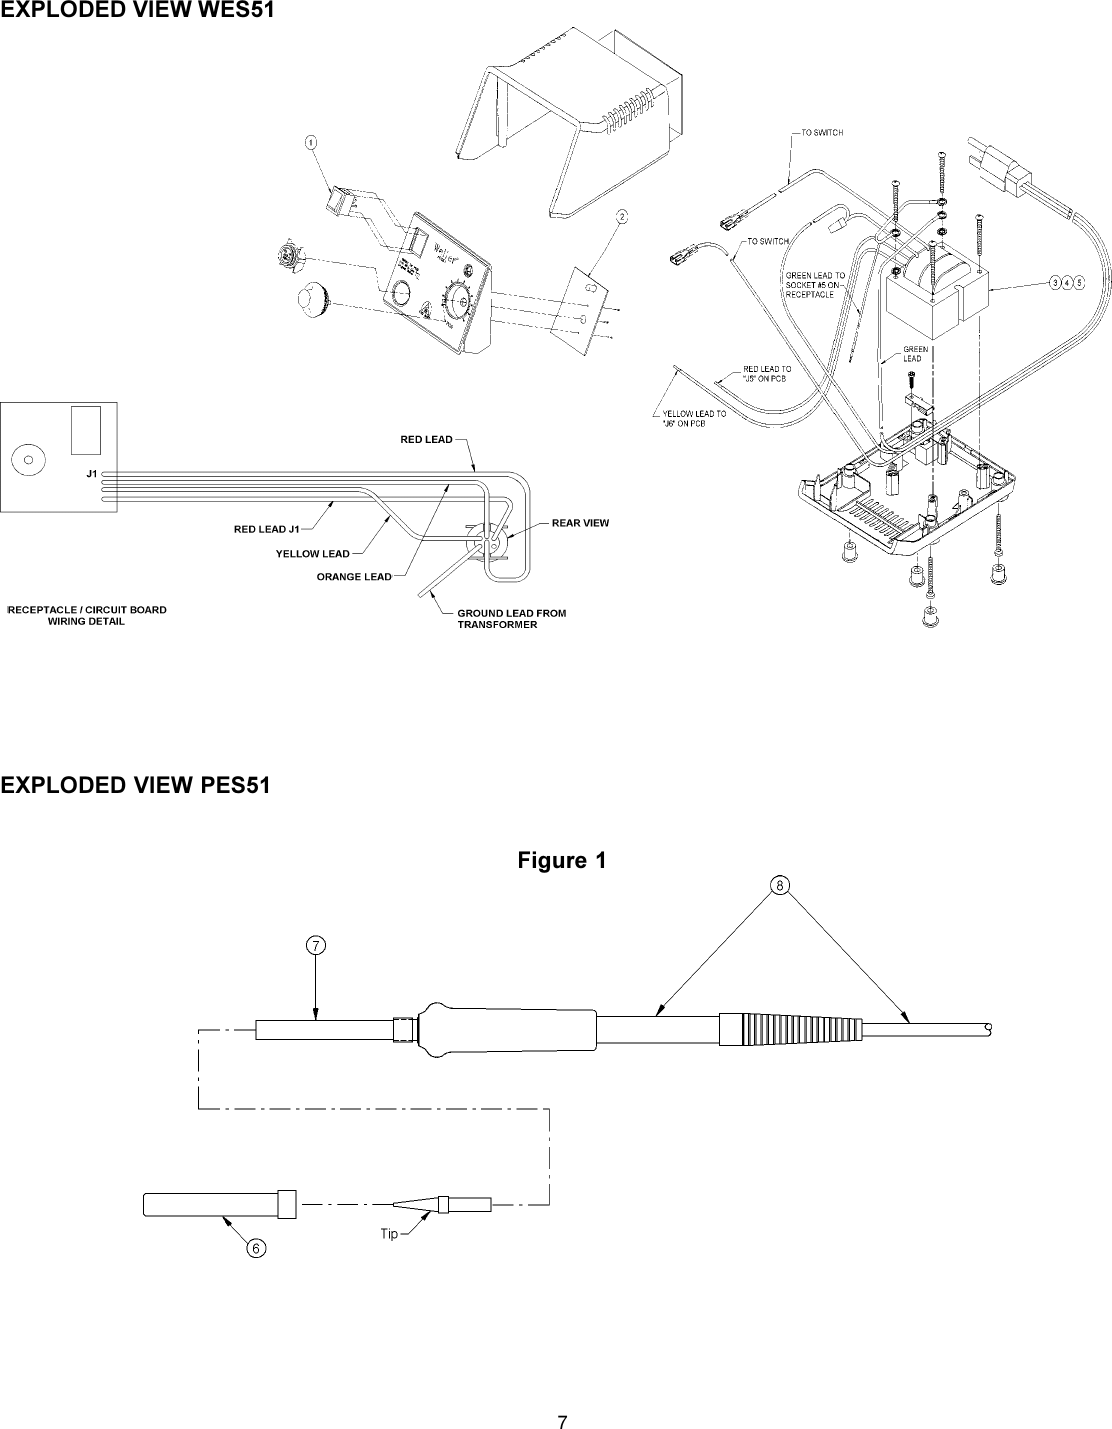 Page 7 of 7 - S2265ch Wes51-online Manual Weller Solder Station